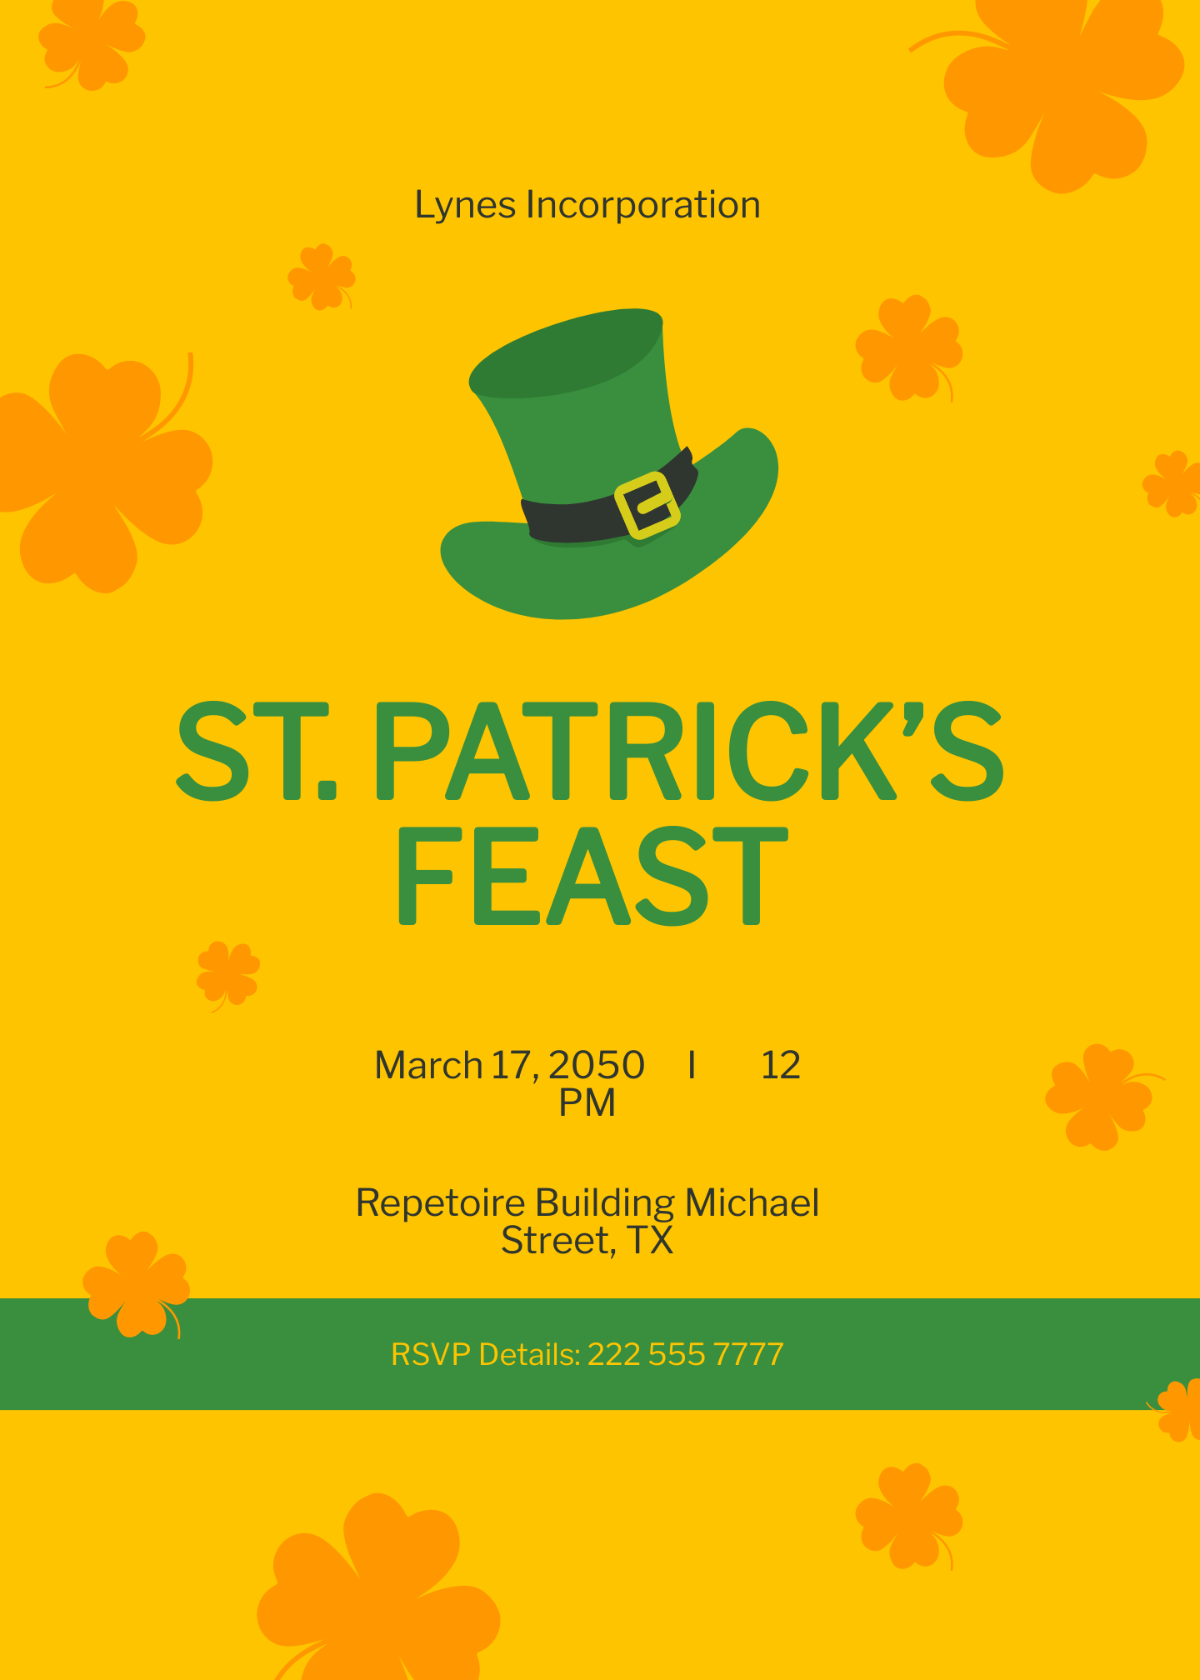 Free Digital St. Patrick's Day Invitation Template